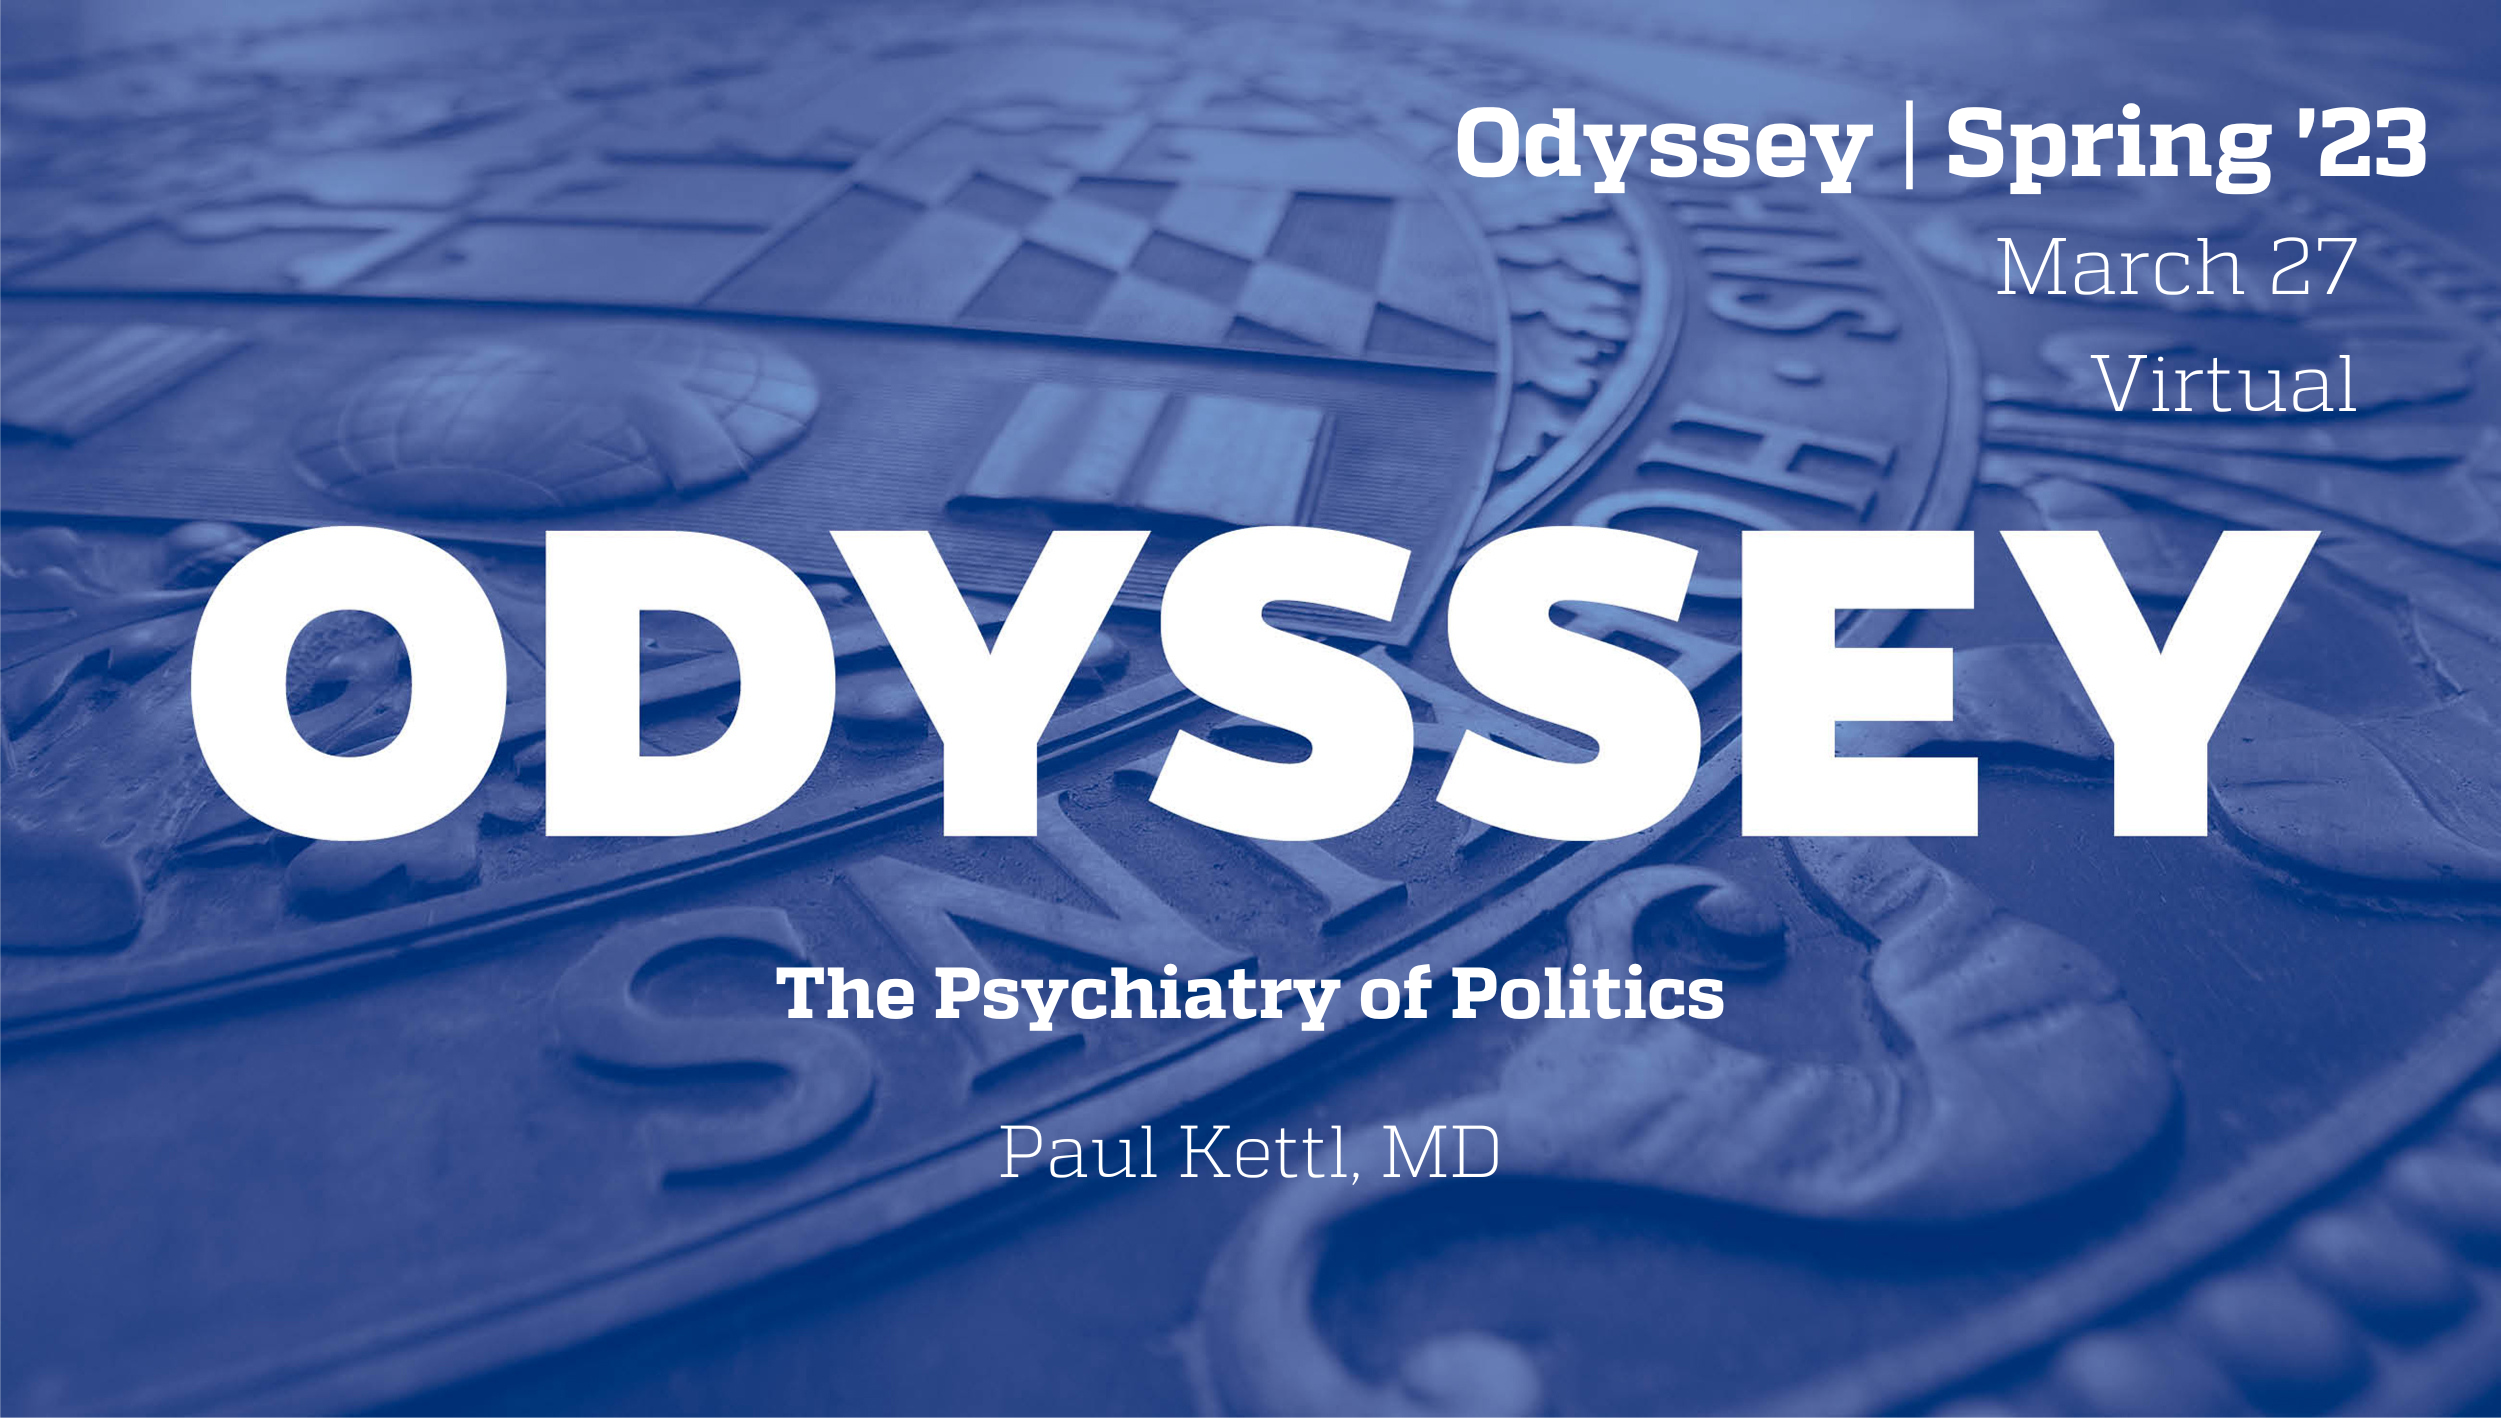 The Psychiatry of Politics